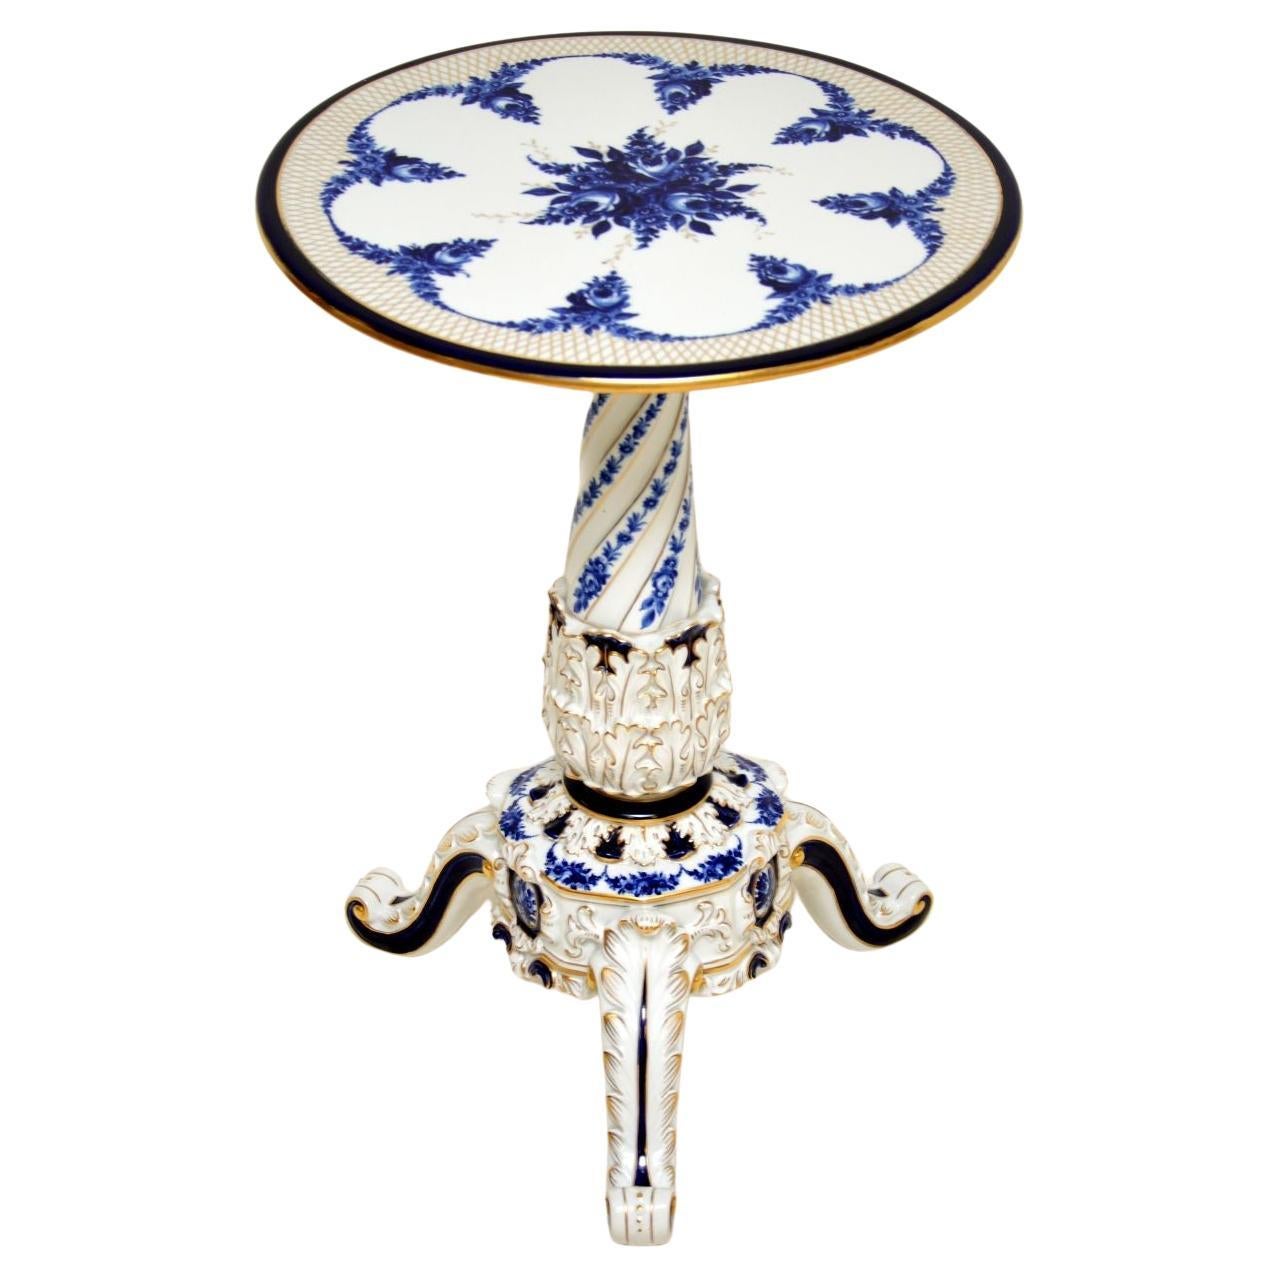 Ancienne table tripode en porcelaine allemande